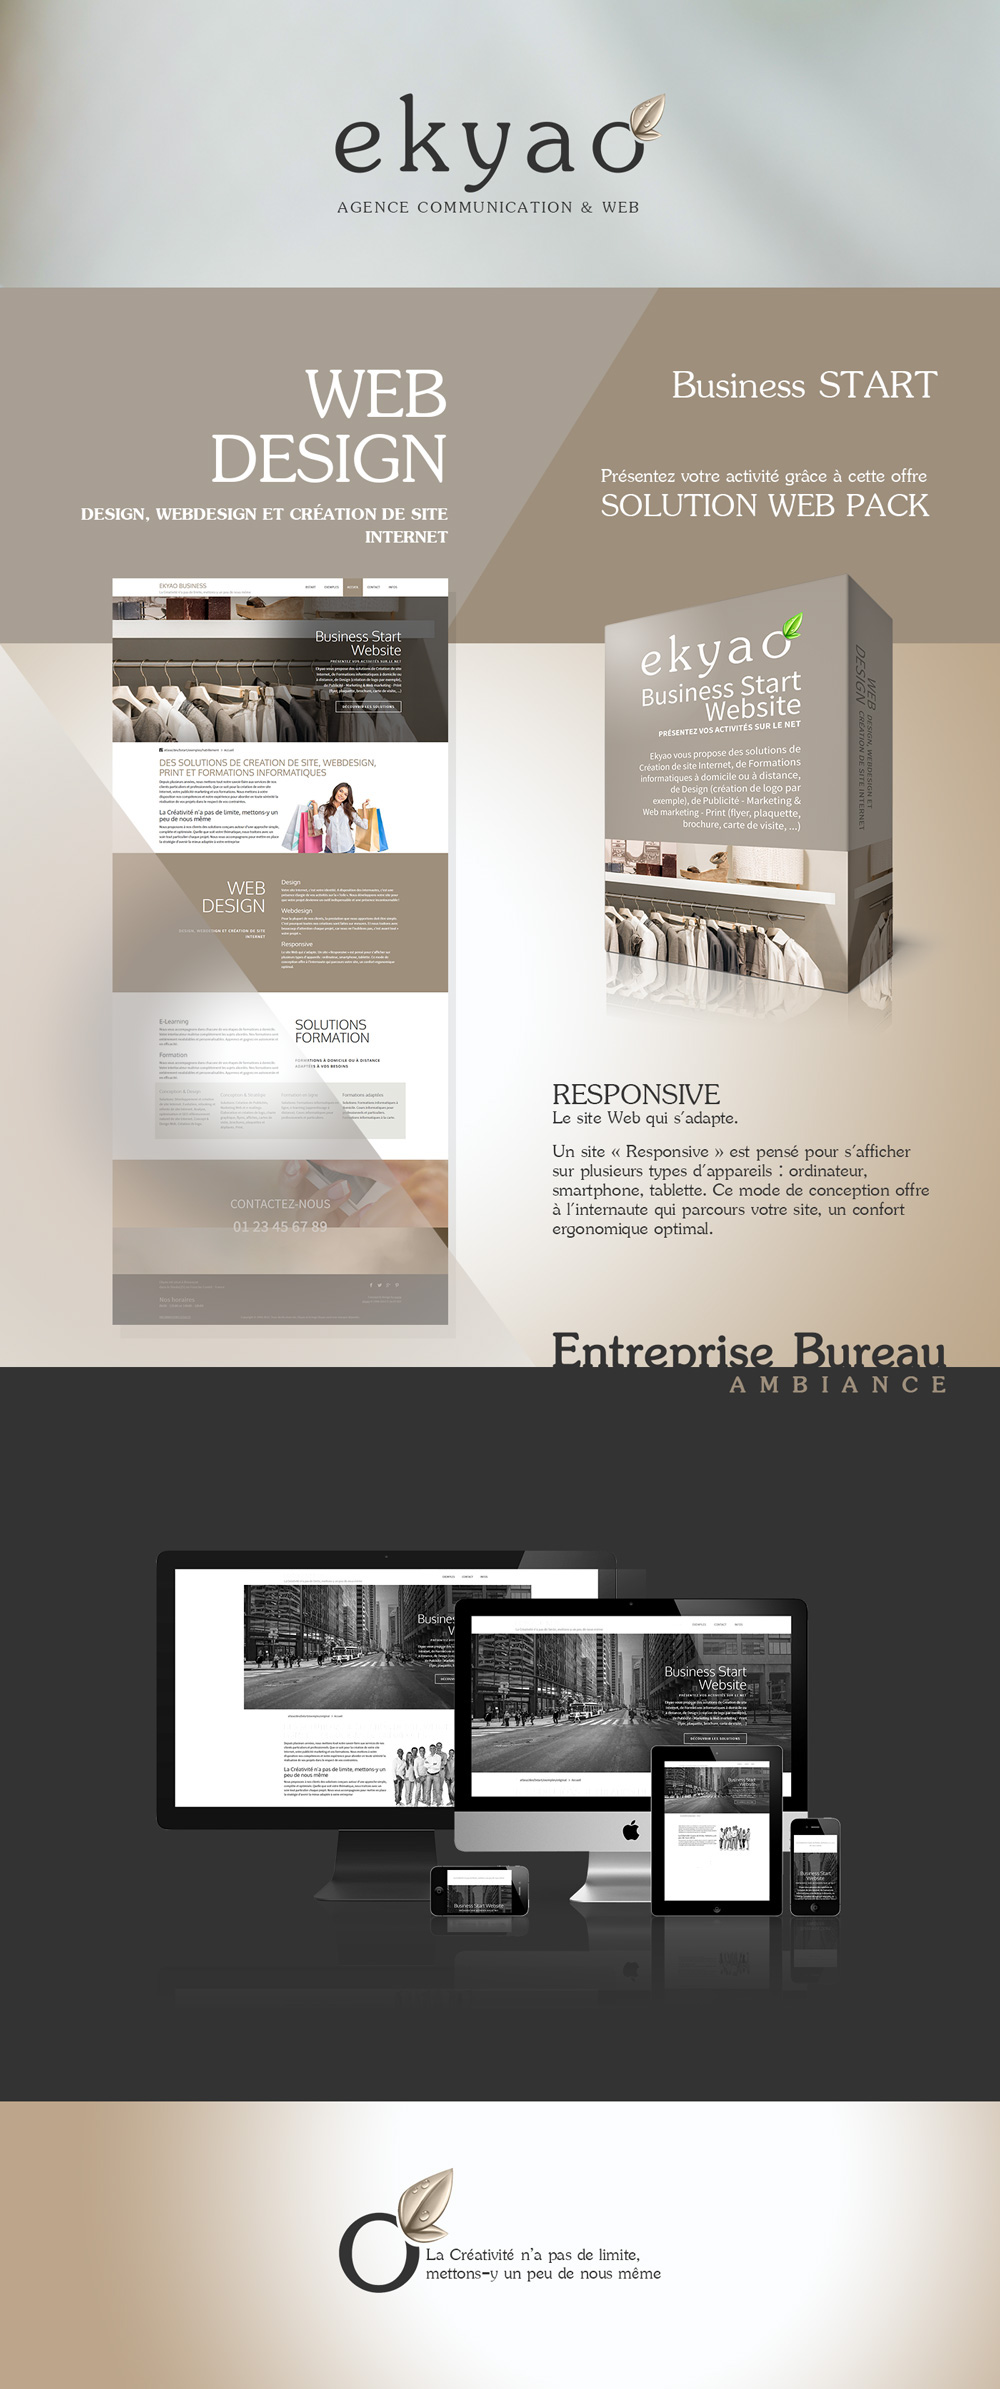 Adobe Portfolio ekyao business start agence communication design presentation logo Responsive Website Webdesign